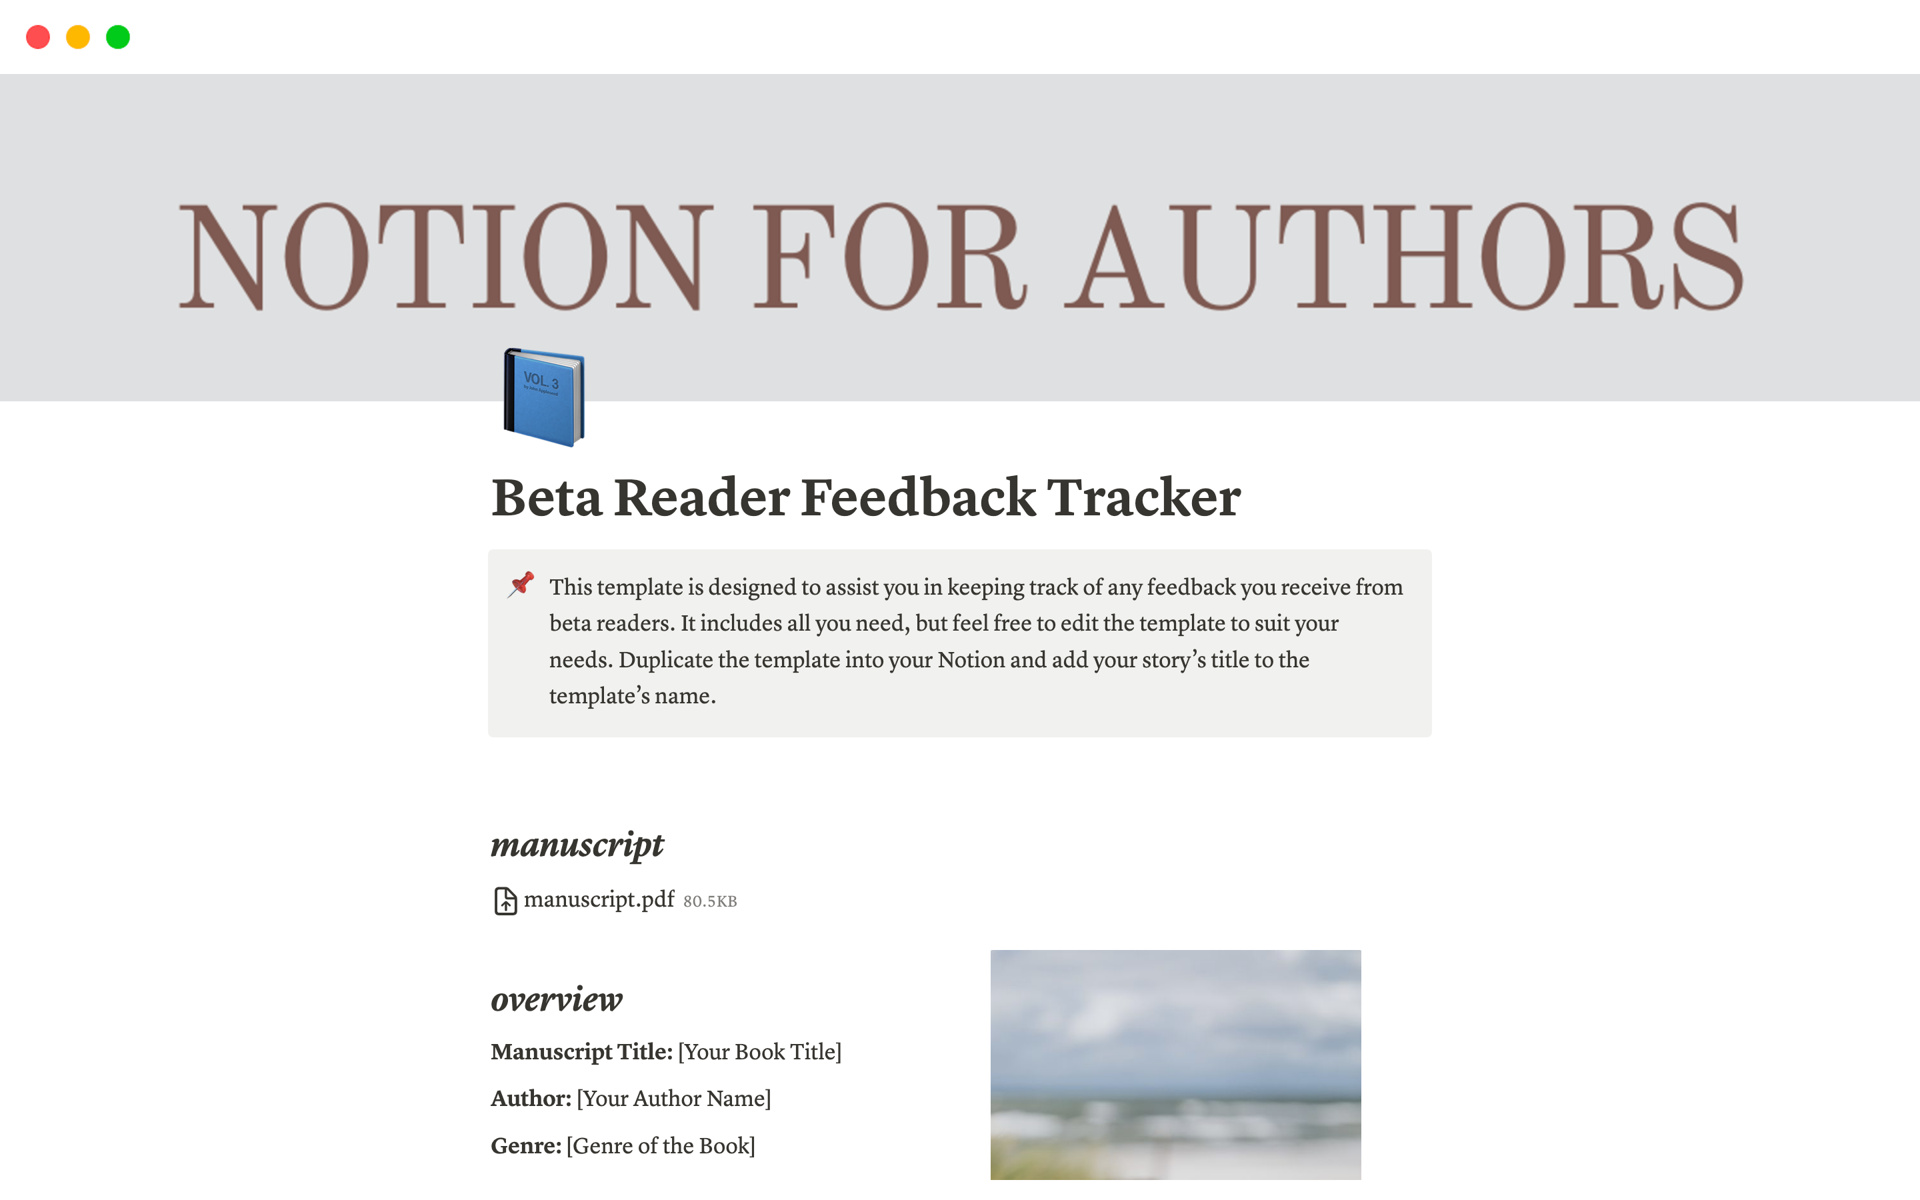 Aperçu du modèle de Beta Reader Feedback Tracker